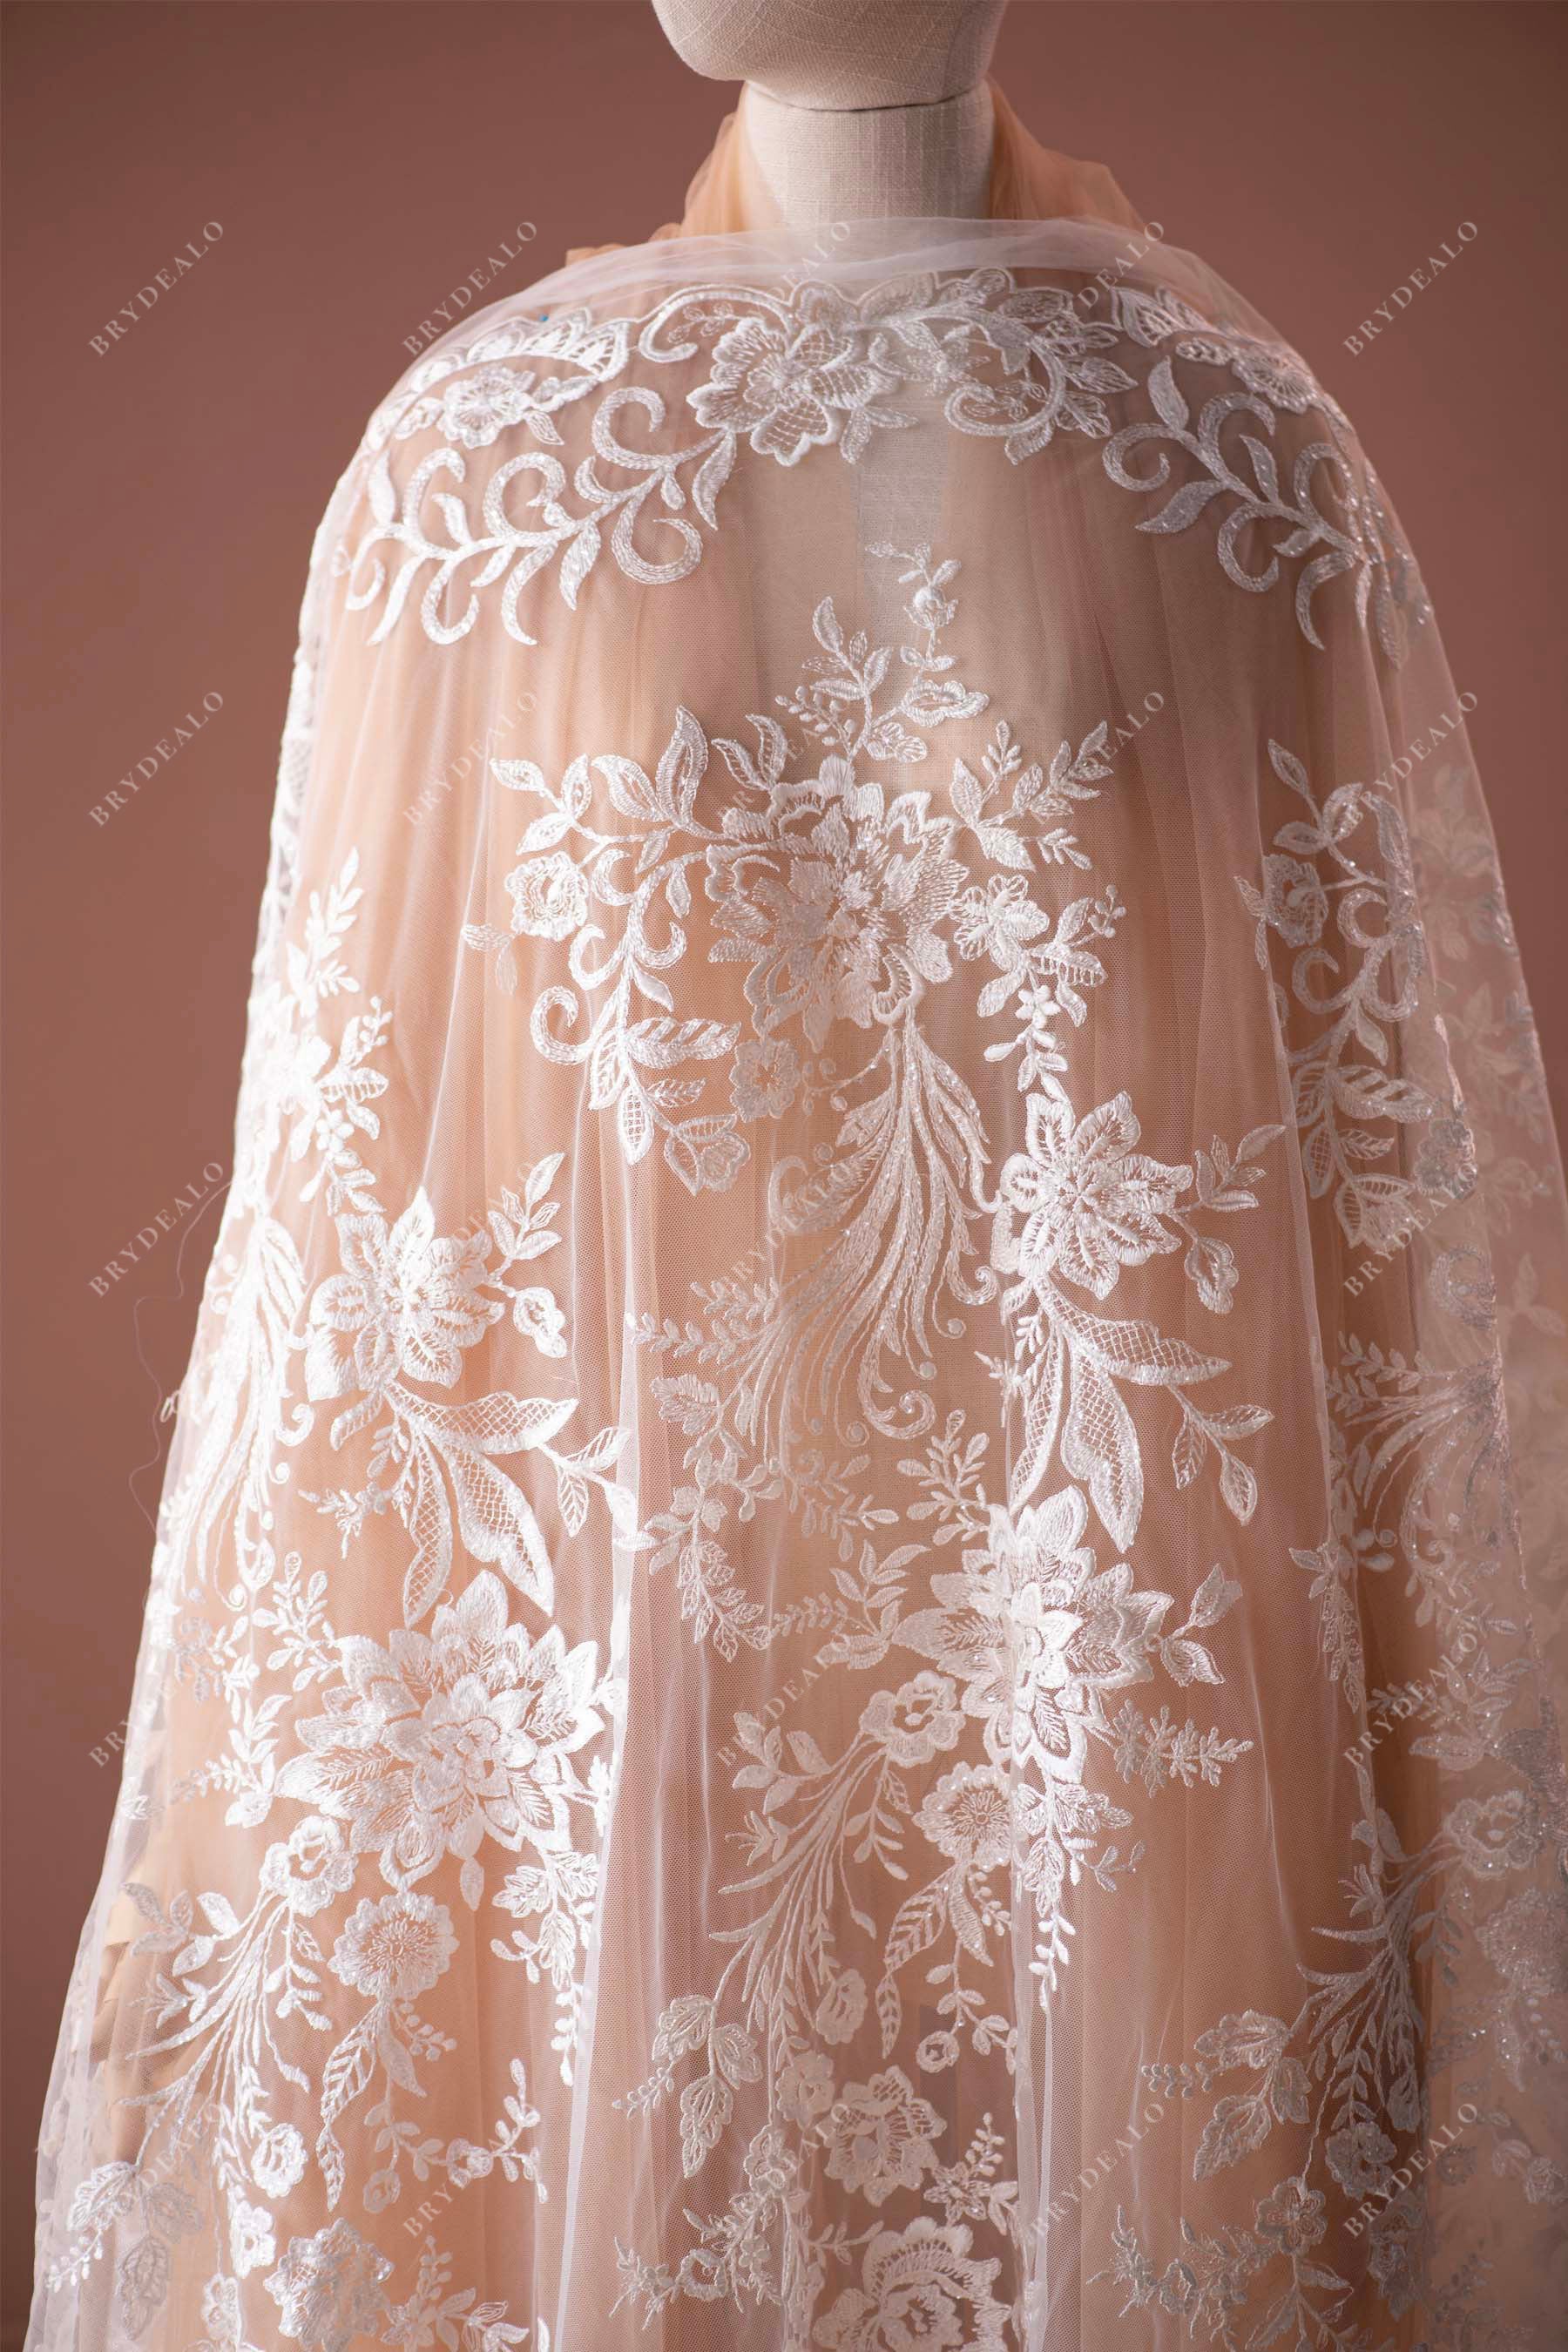 custom wedding dress flower lace fabric